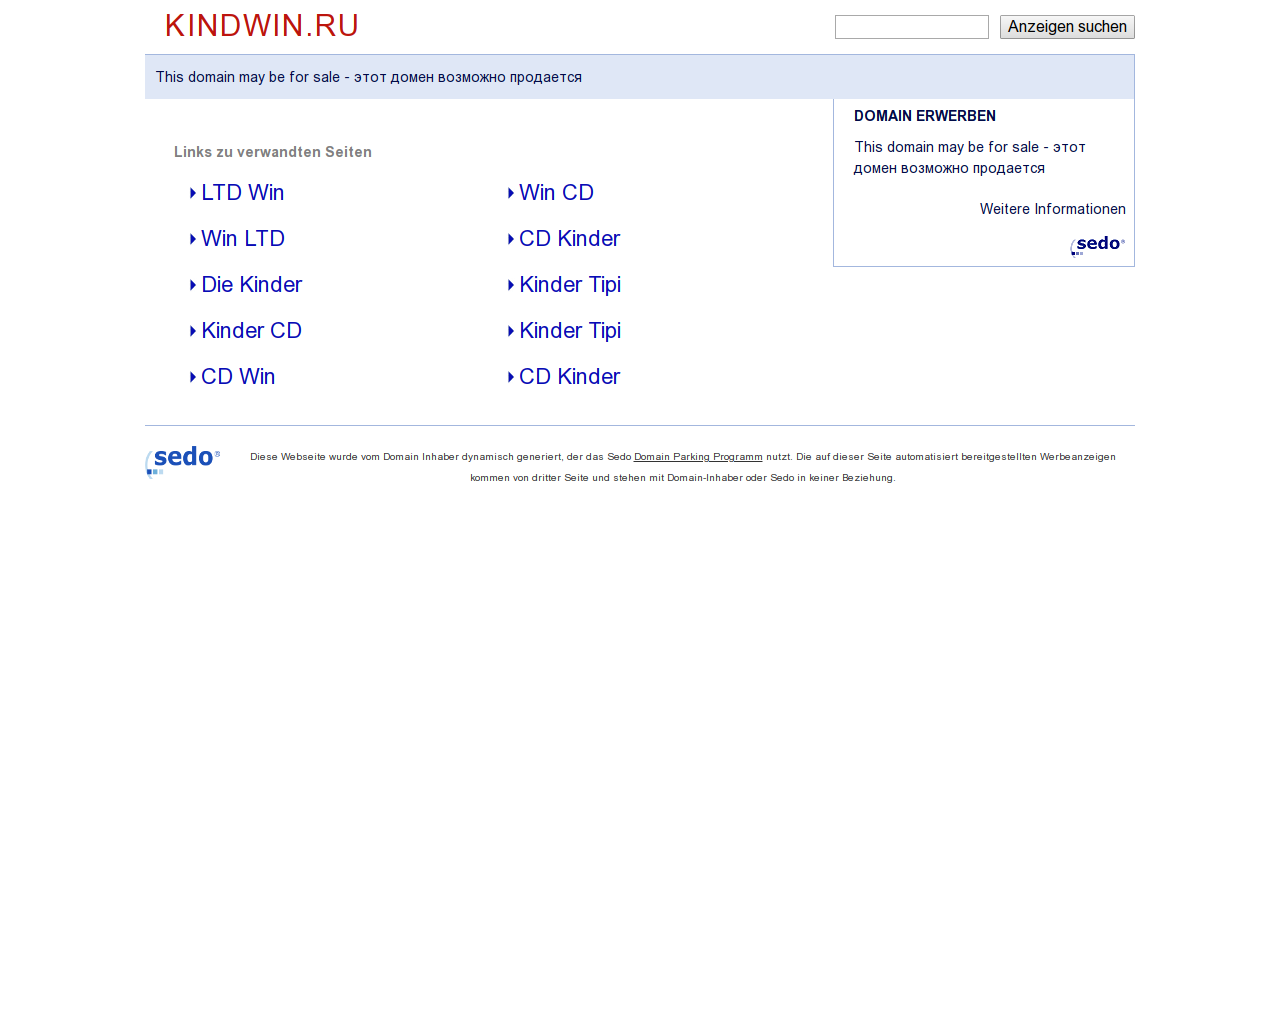 Изображение сайта kindwin.ru в разрешении 1280x1024